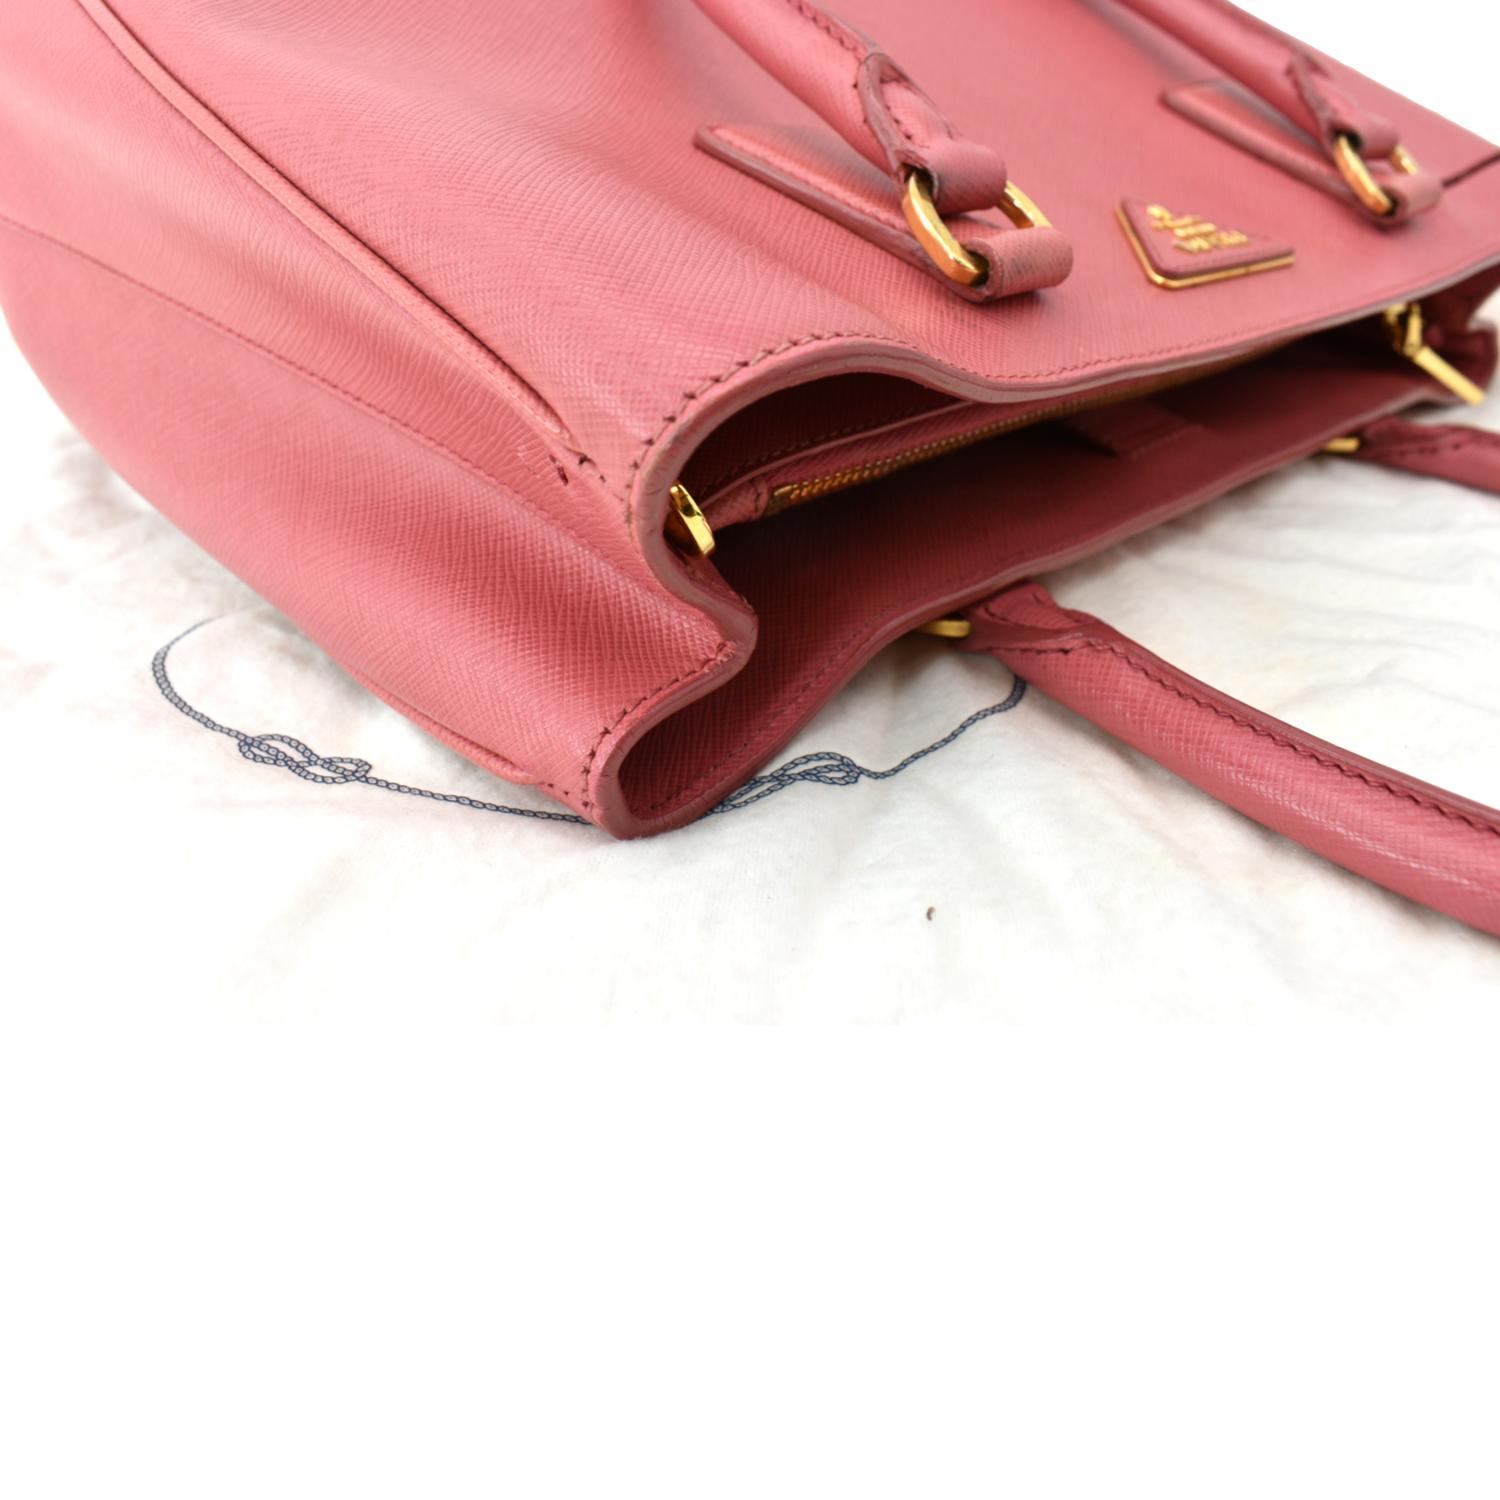 Prada Bag Large Galleria Saffiano Leather Bag With Box 675 (J839